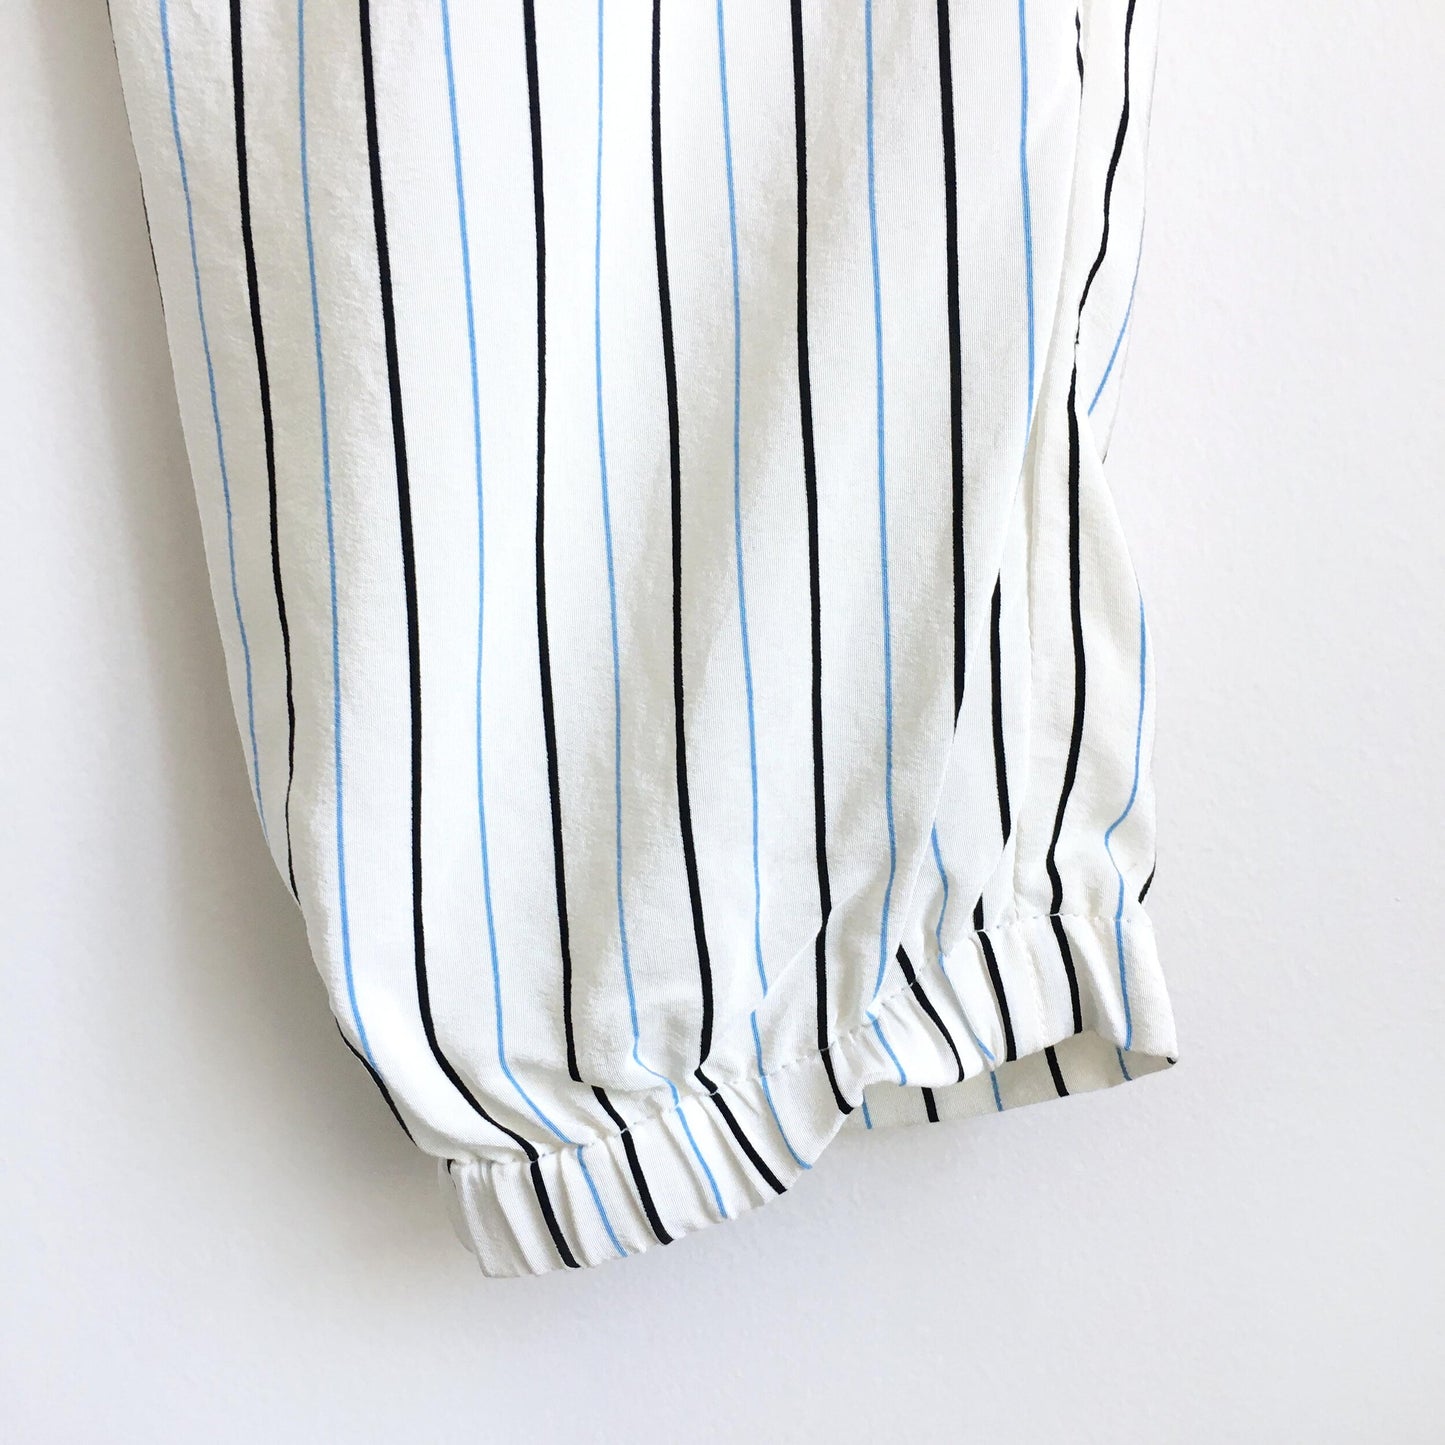 TIBI Striped silk crepe de chine tapered pants - size 4